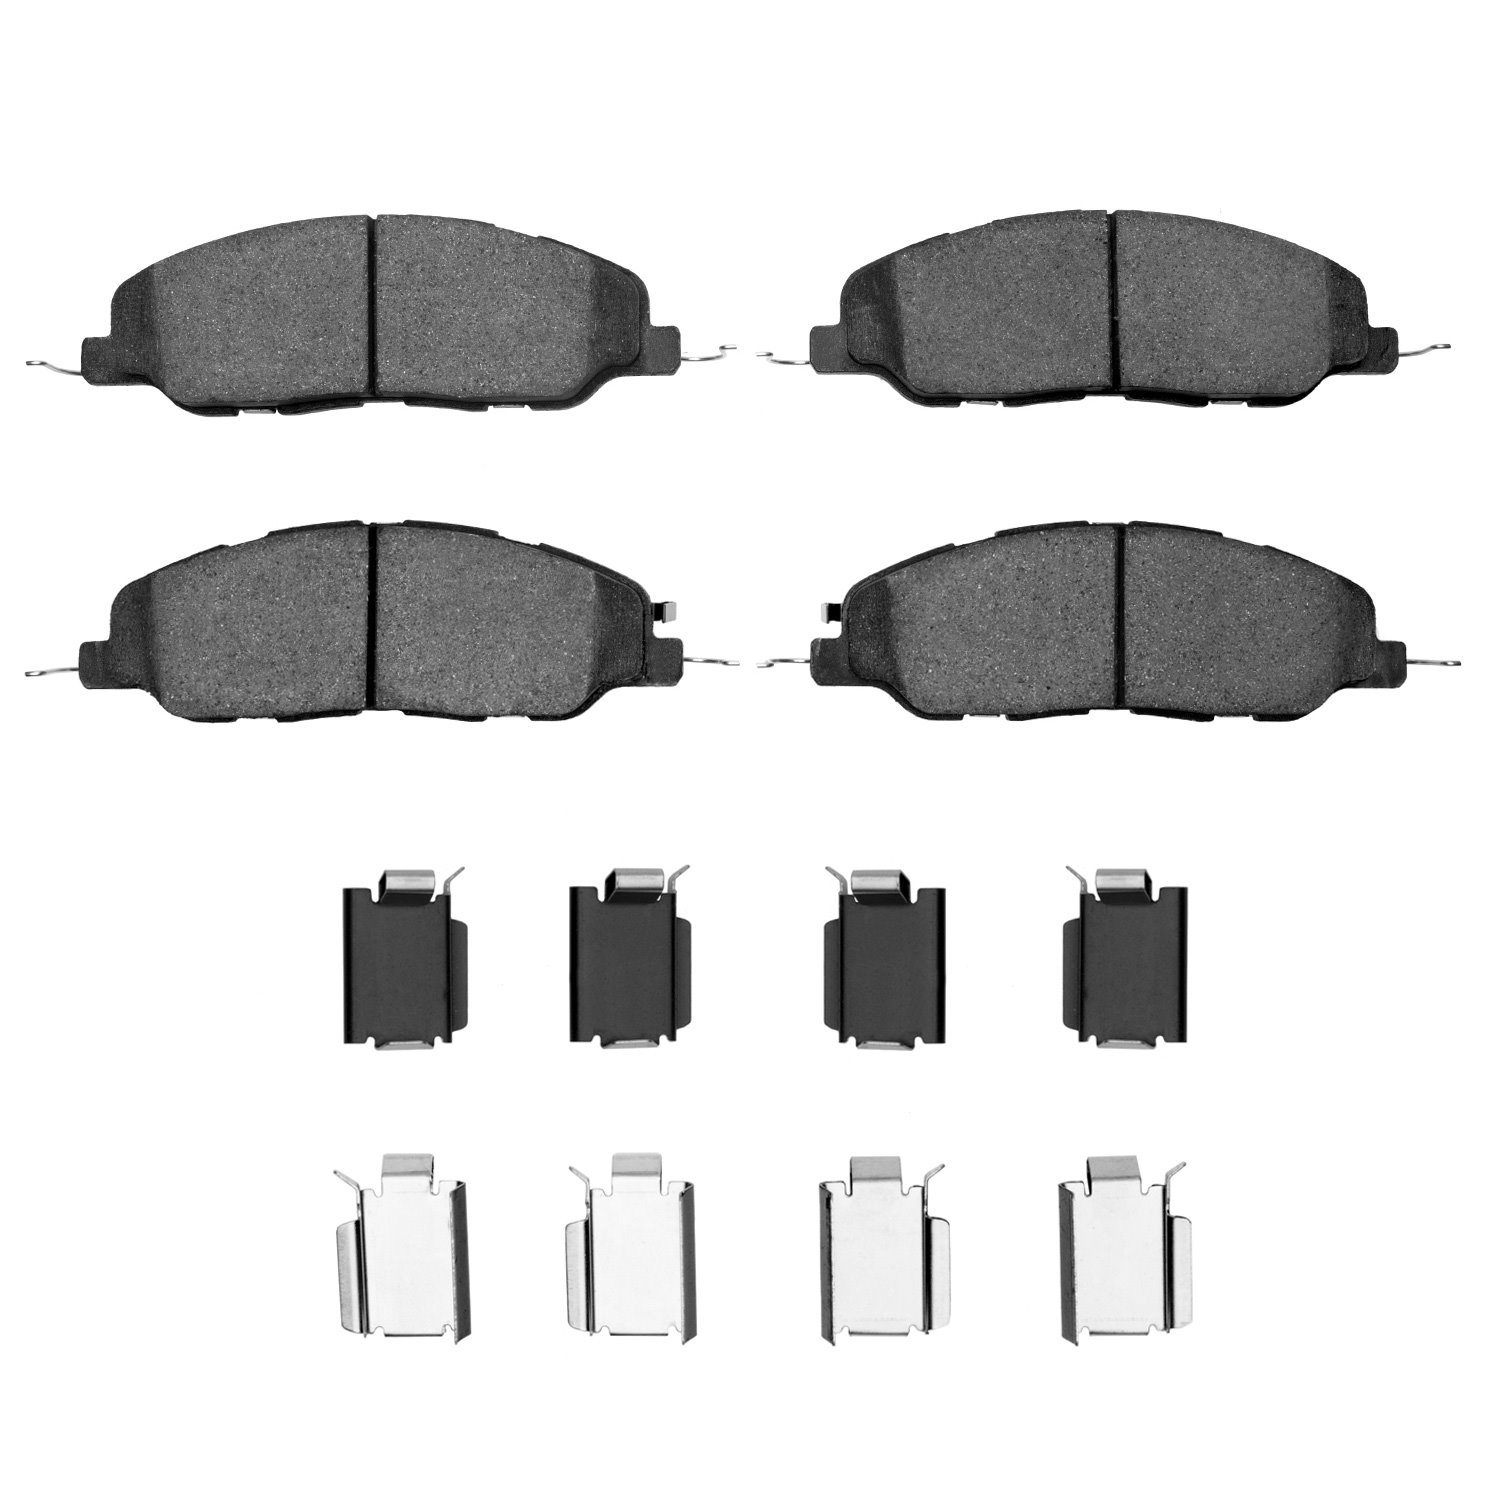 1552-1463-01 5000 Advanced Low-Metallic Brake Pads & Hardware Kit, 2007-2014 Ford/Lincoln/Mercury/Mazda, Position: Front